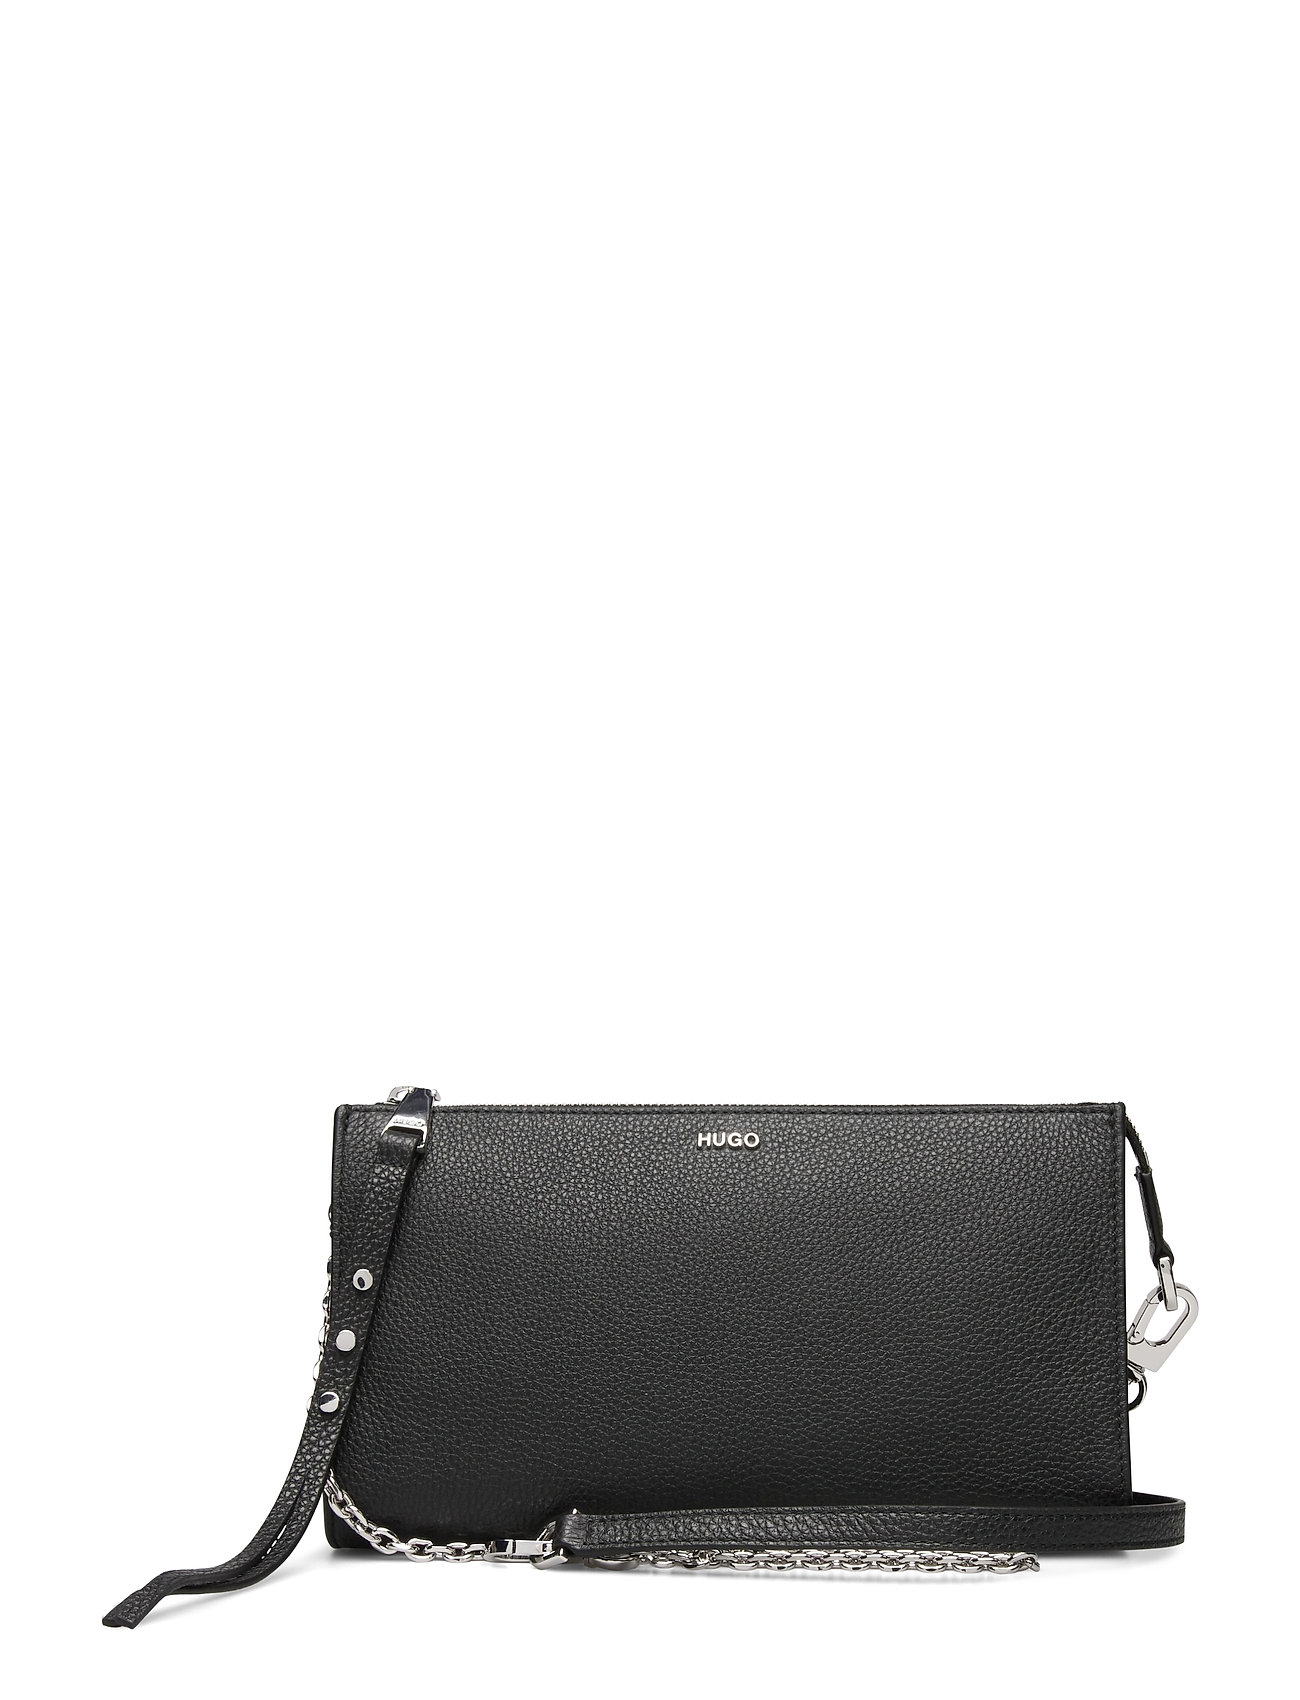 Hugo Boss skuldertasker Victoria Mini Bag Bags Small Shoulder Bags - Crossbody Bags Sort HUGO til dame Sort - Pashion.dk